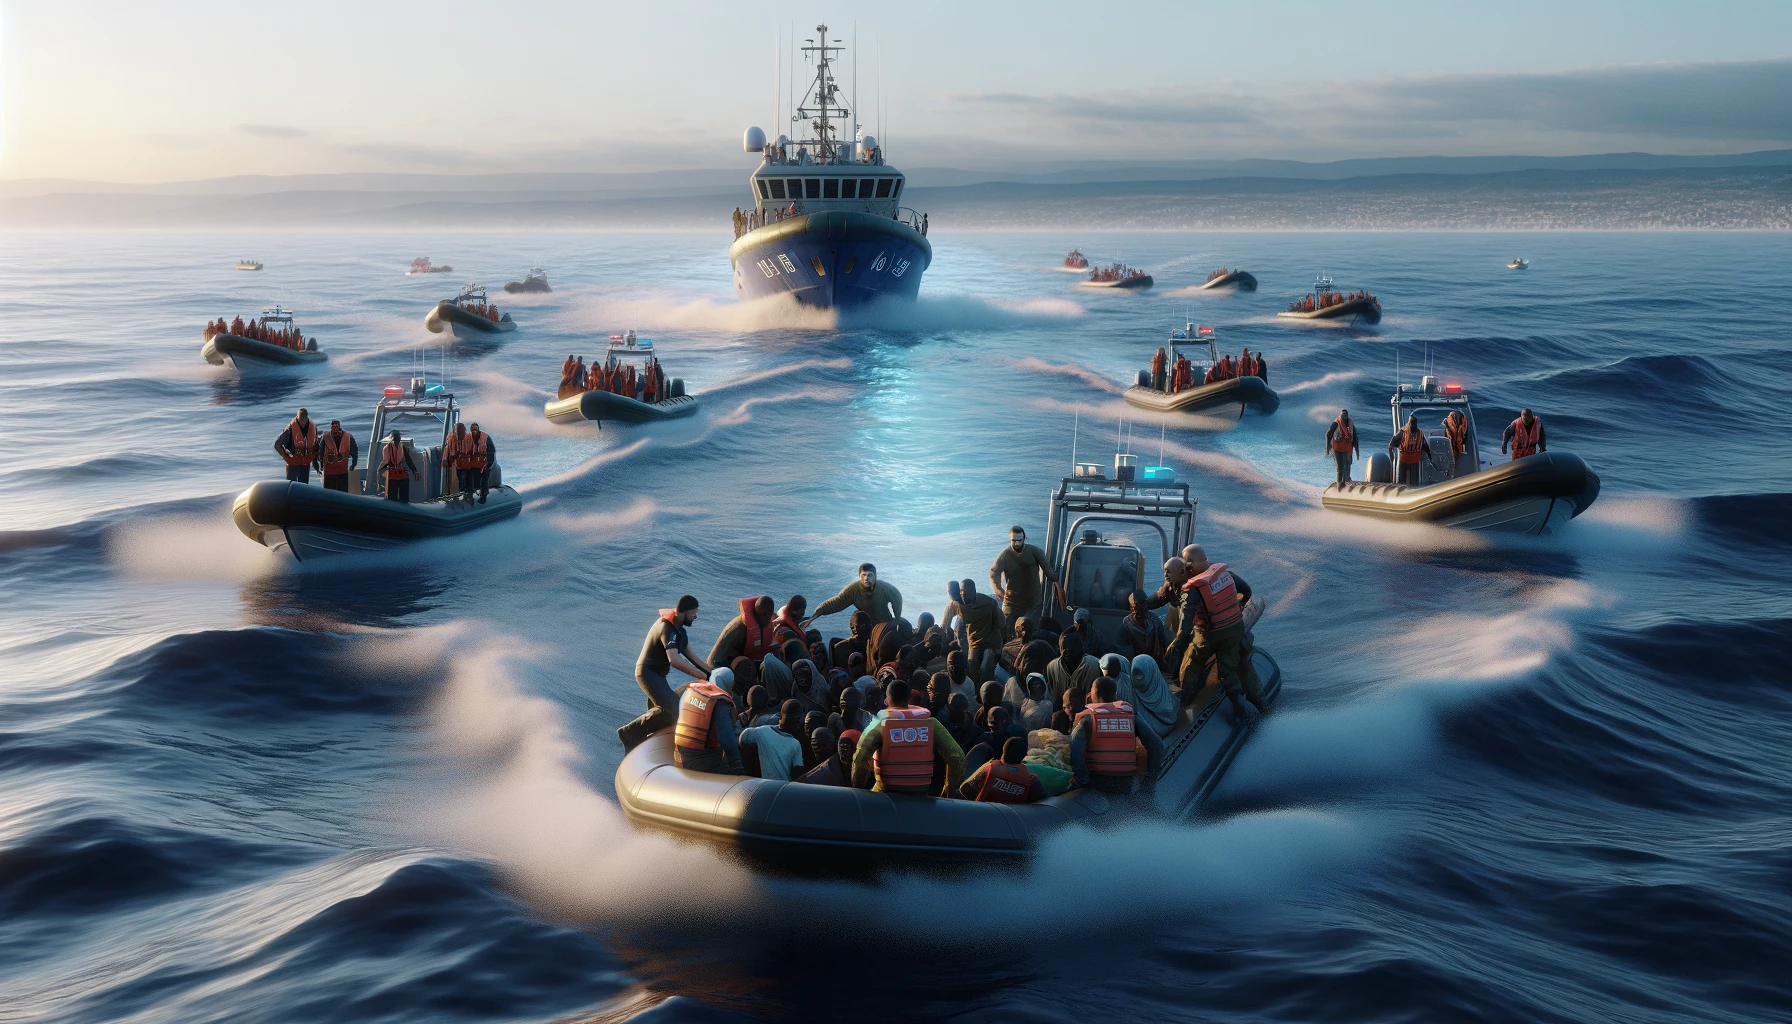 Tunisia Thwarts Dozens of Illegal Sea Crossings, Rescues Almost 1,200